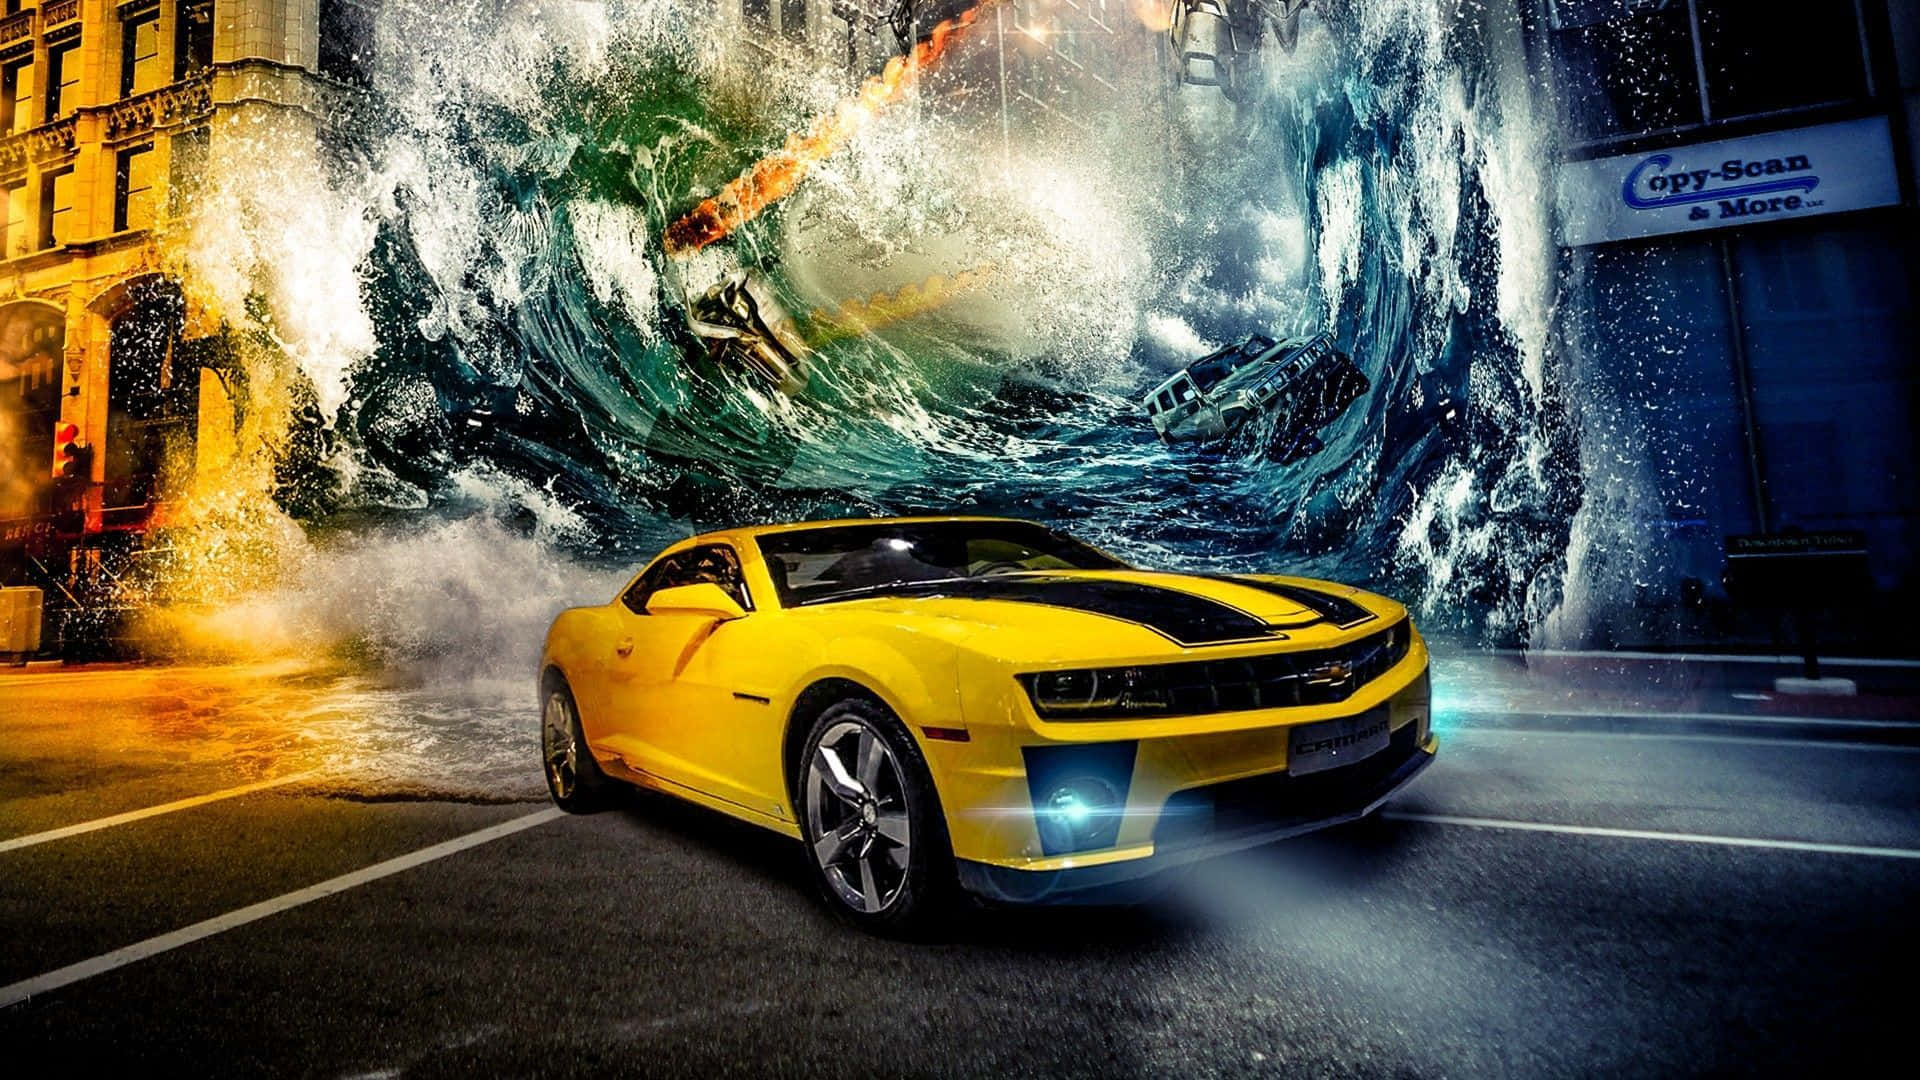 Stunning Yellow Sports Car Wallpaper